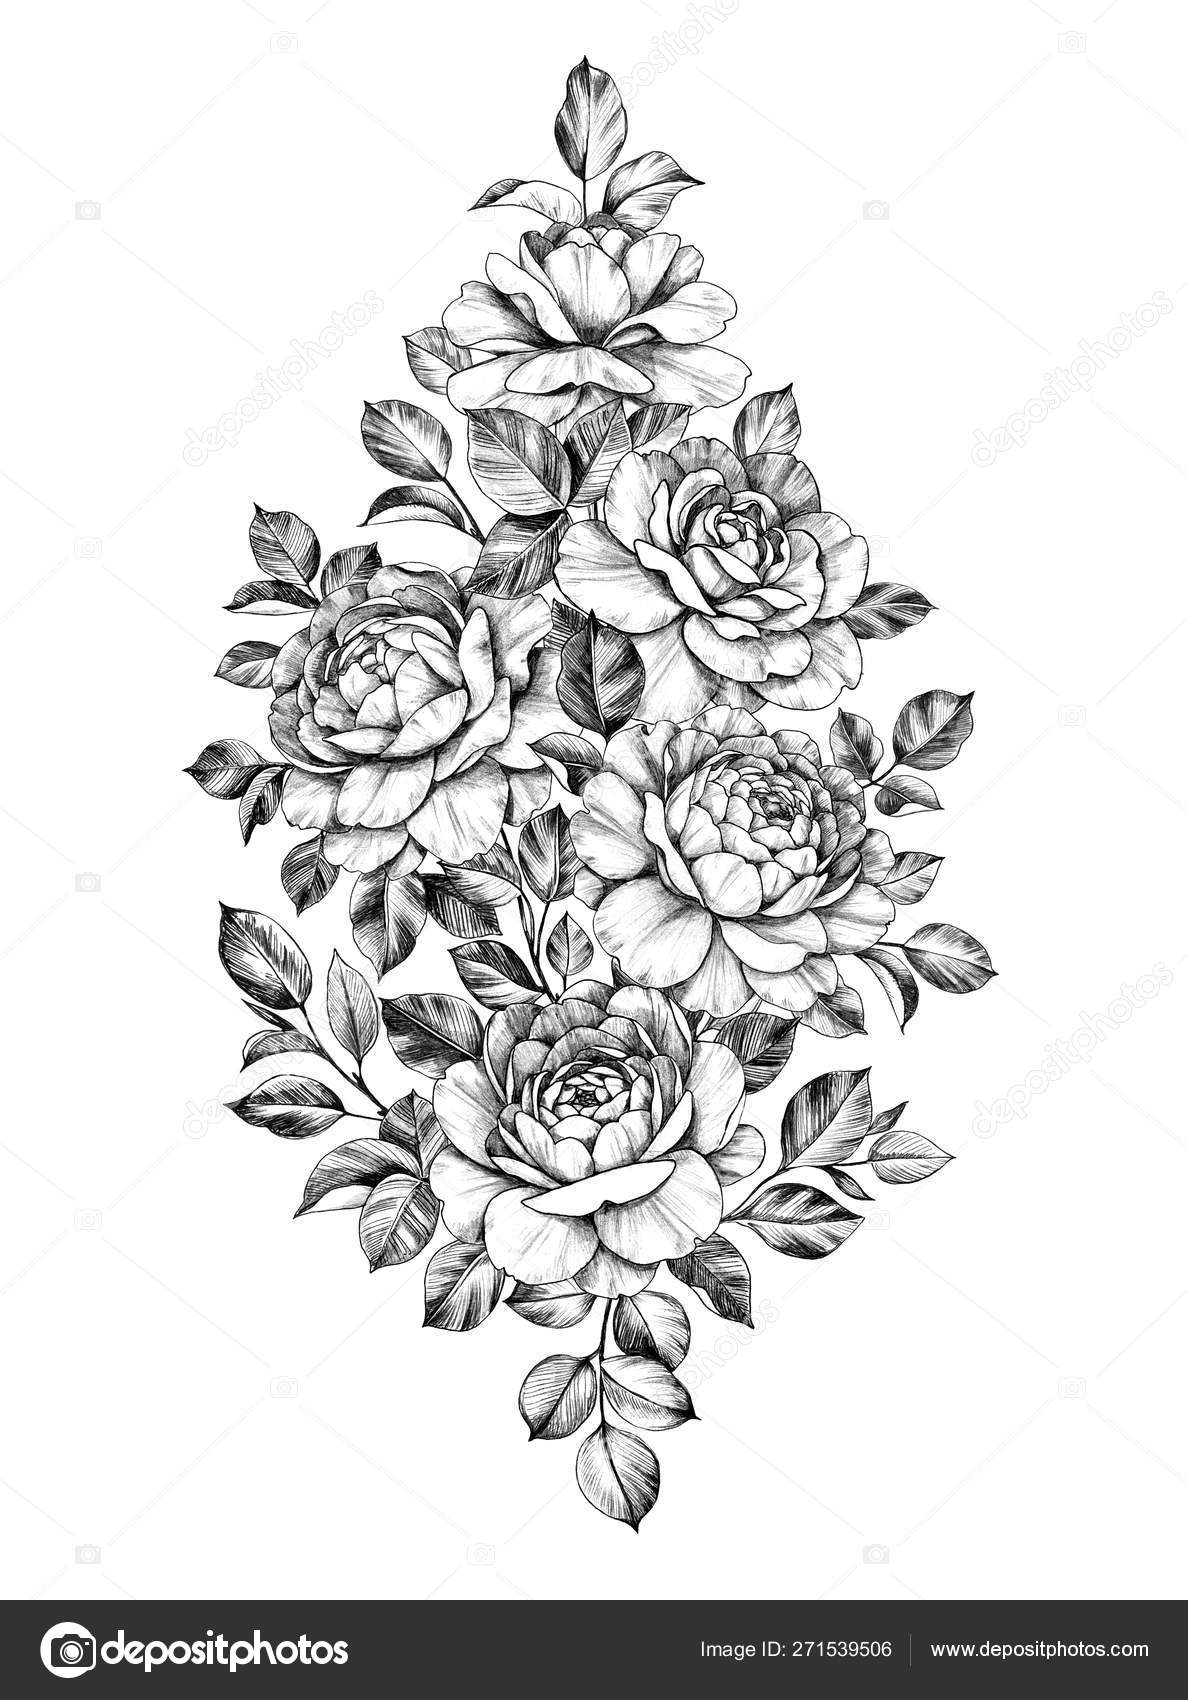 https://st4.depositphotos.com/2488555/27153/i/1600/depositphotos_271539506-stock-illustration-hand-drawn-bouquet-rose-flowers.jpg